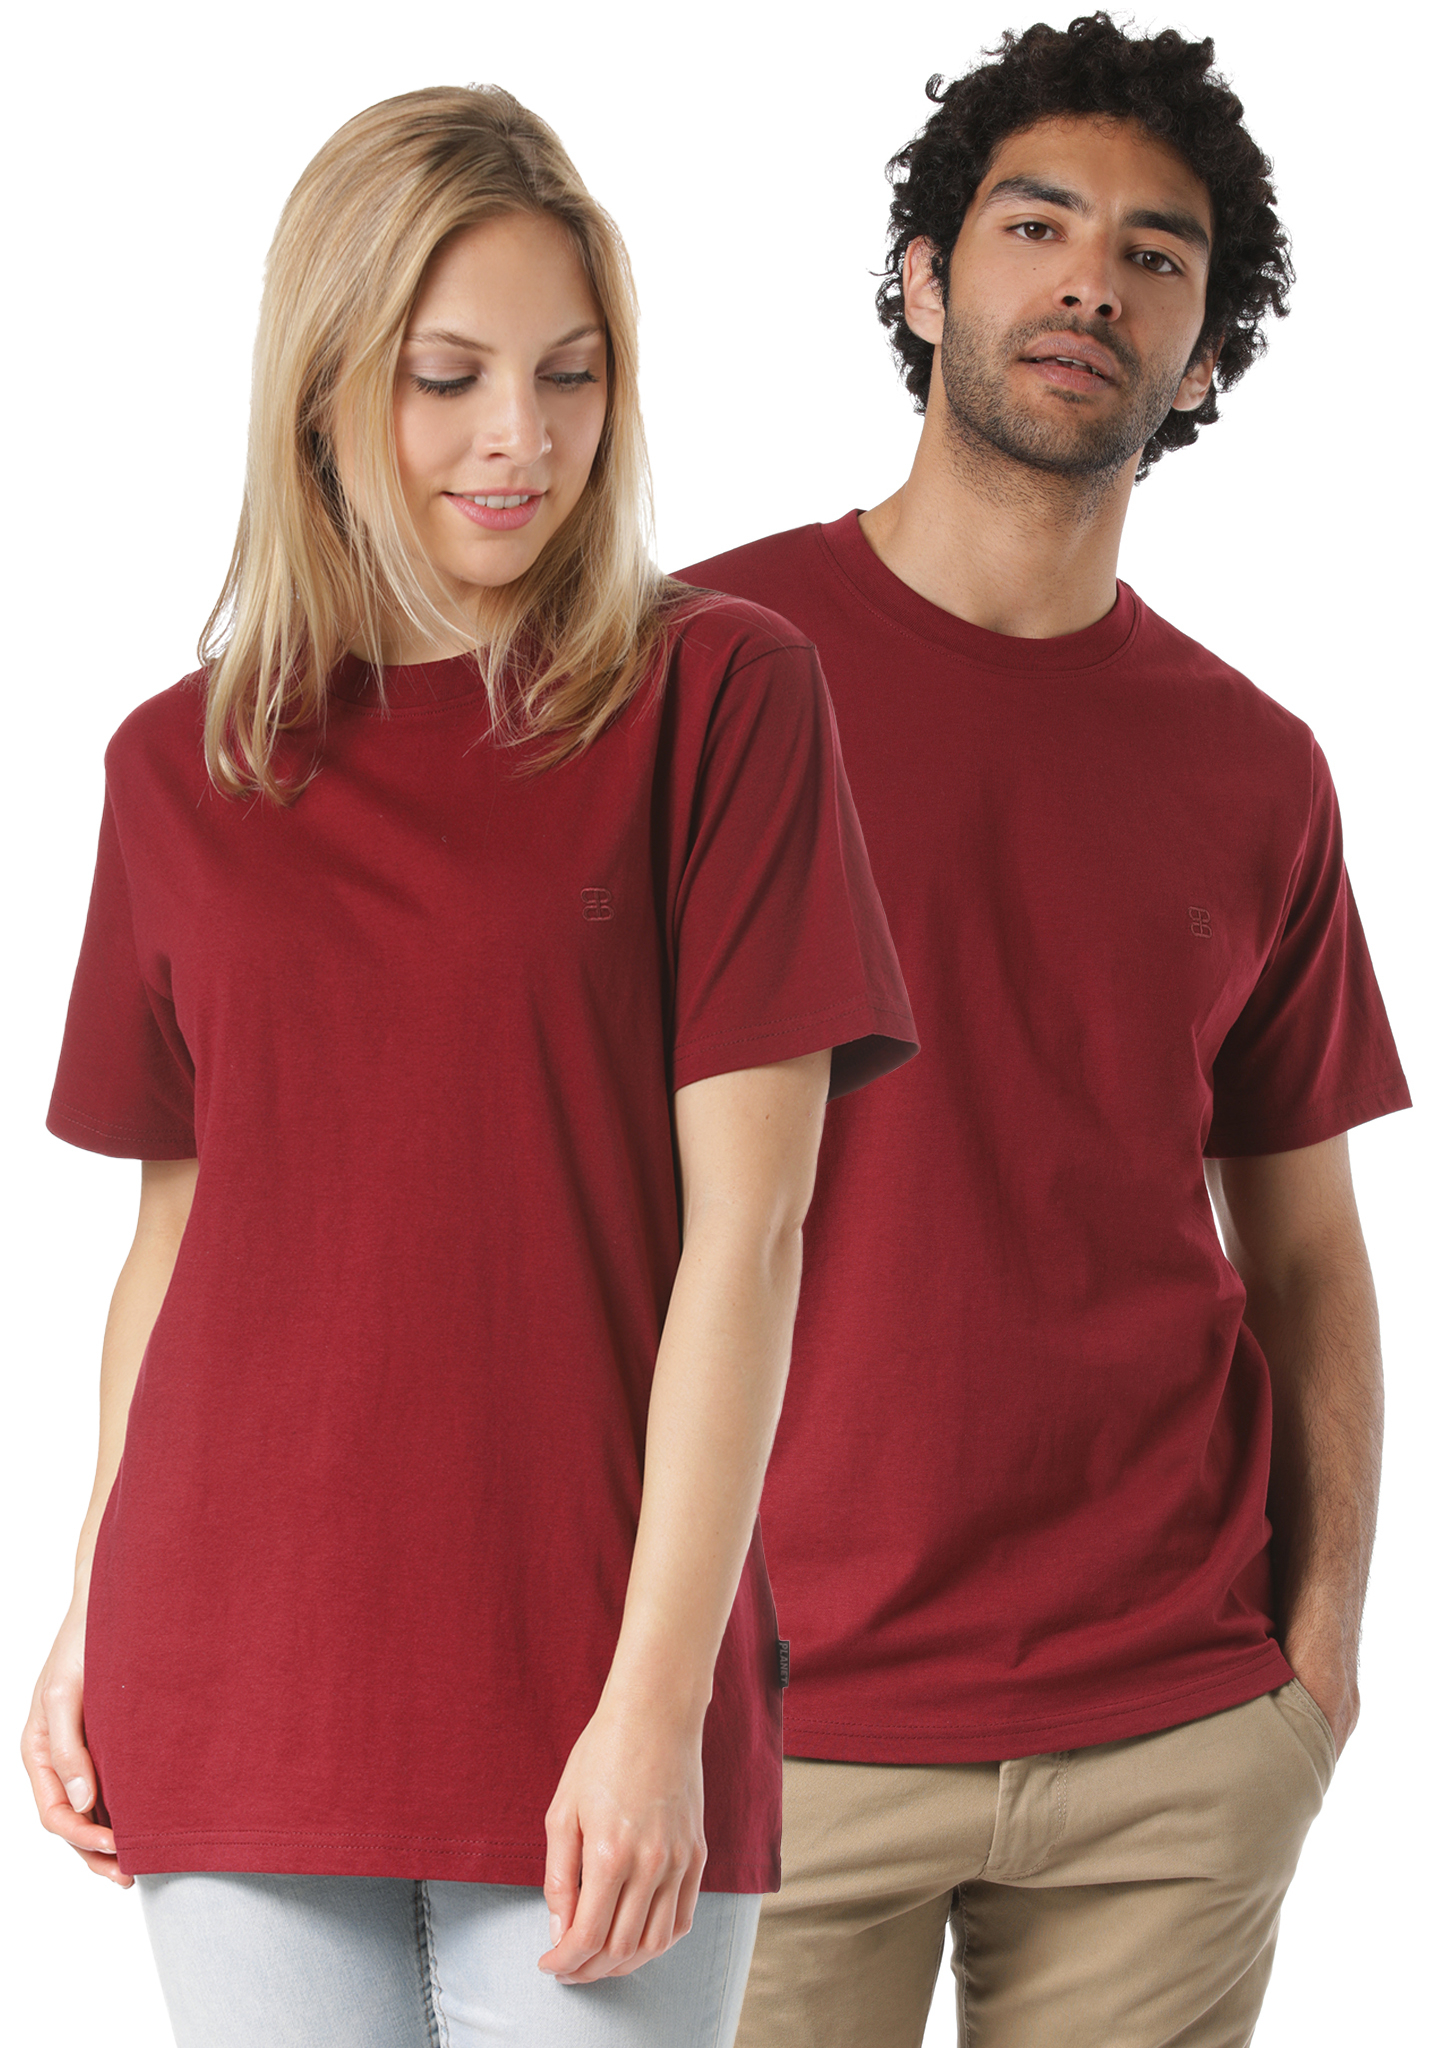 Planet Sports Franklin T-Shirt rumba red XXL